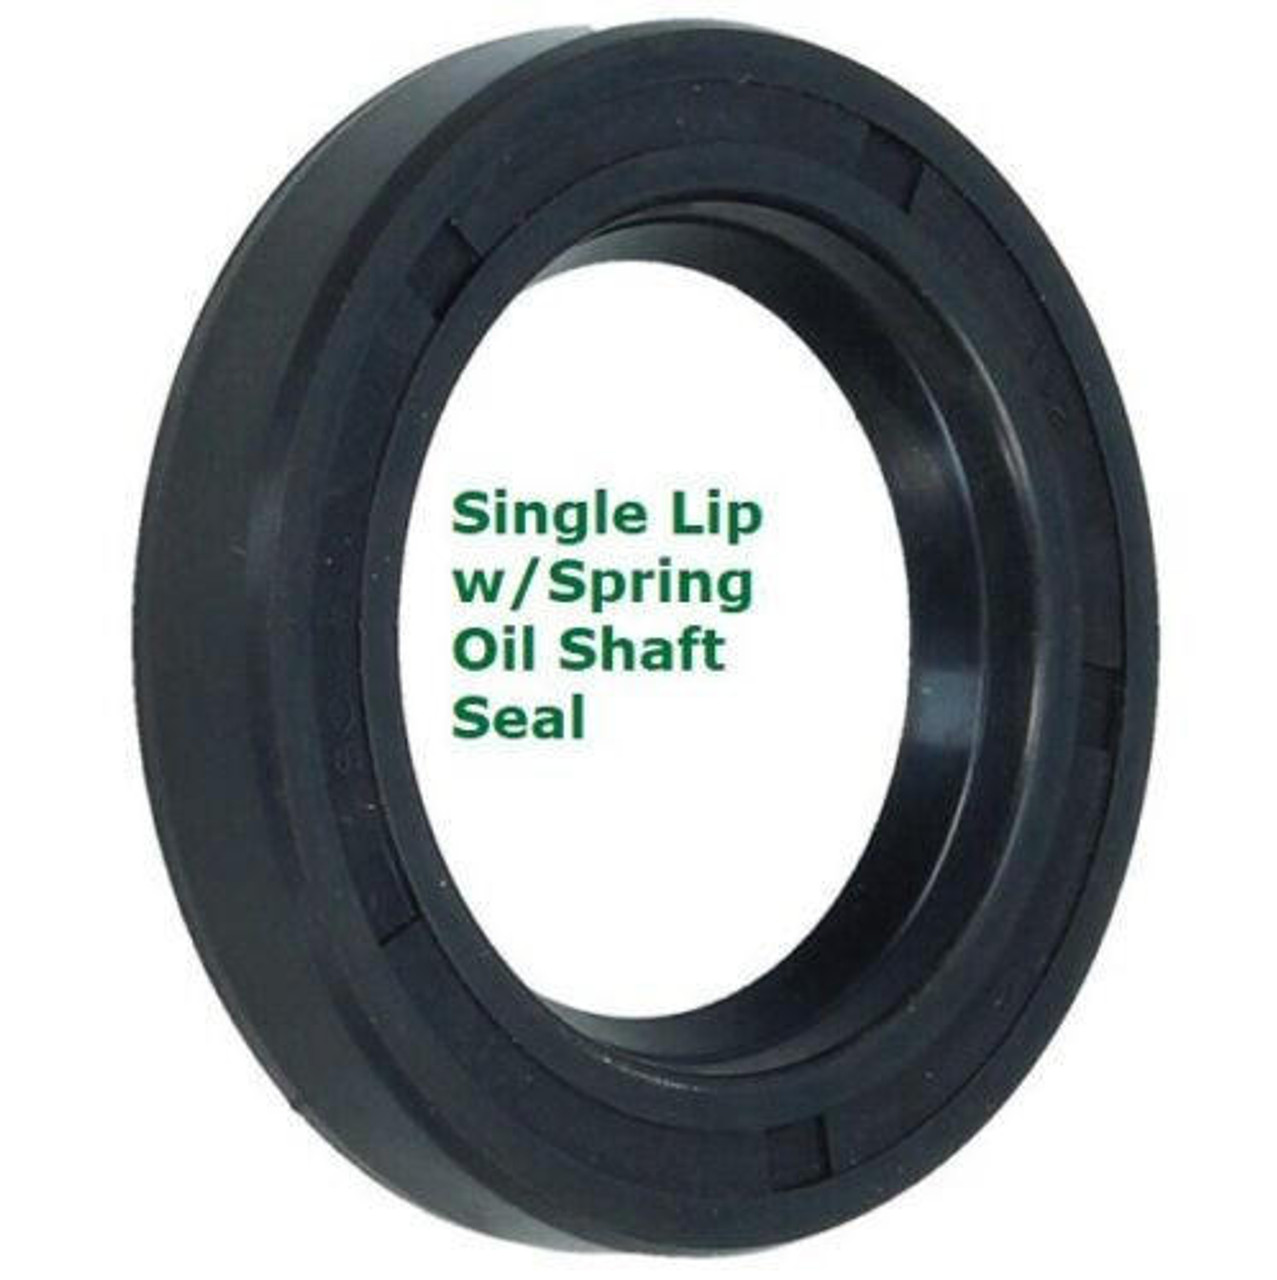 Metric Oil Shaft Seal 190 x 220 x 16mm   Single Lip   Price for 1 pc